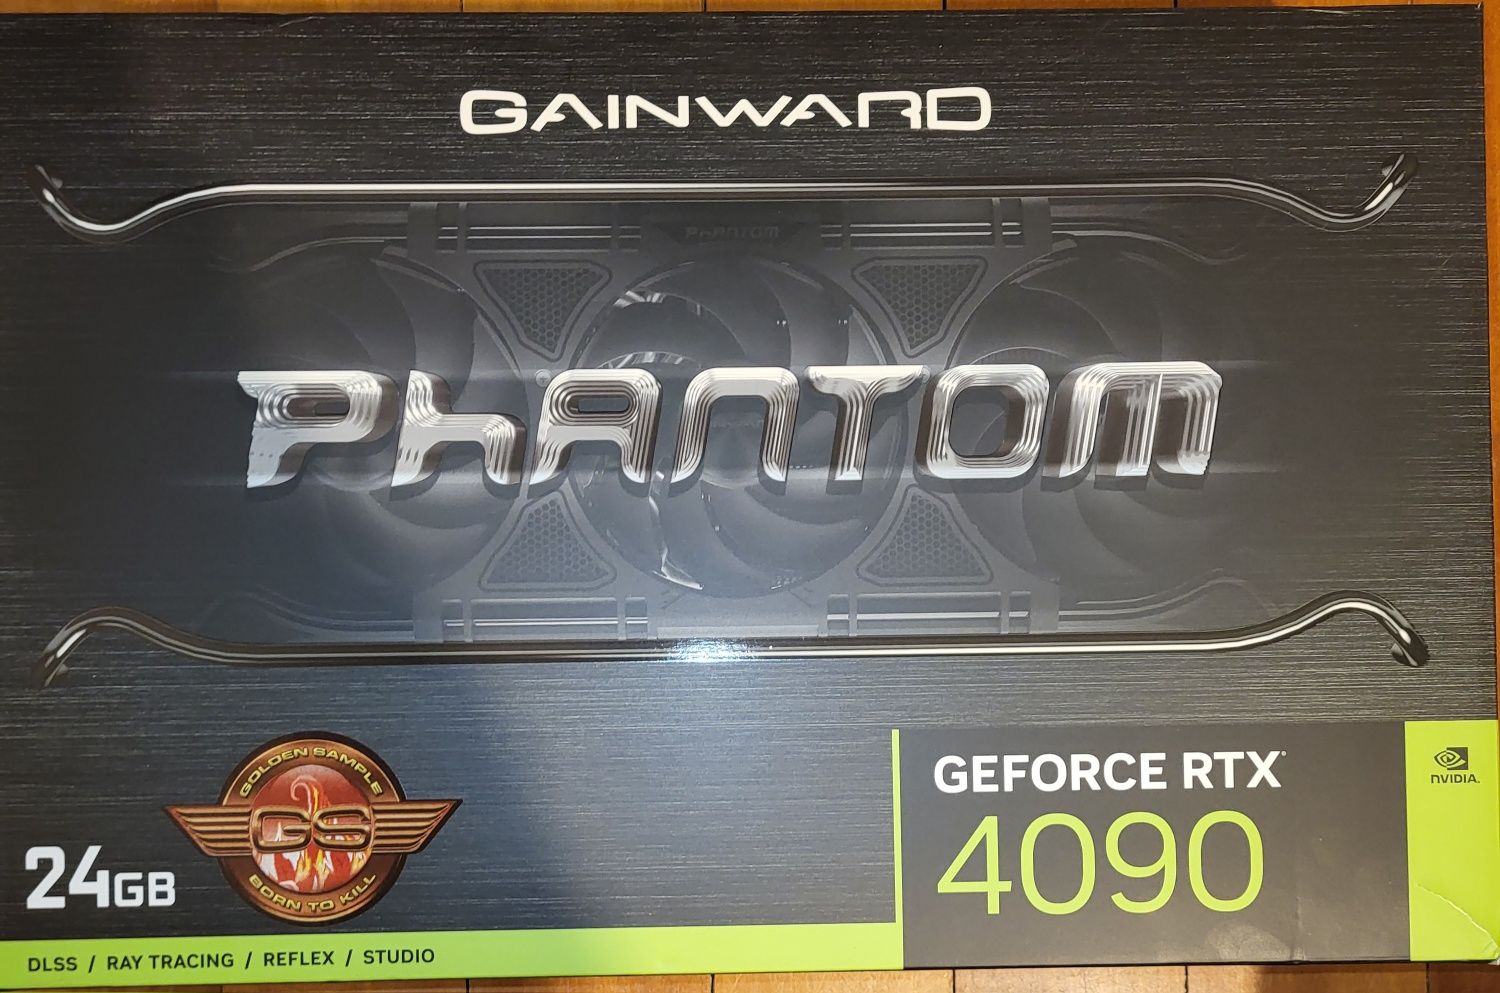 Rtx 4090 phantom gs